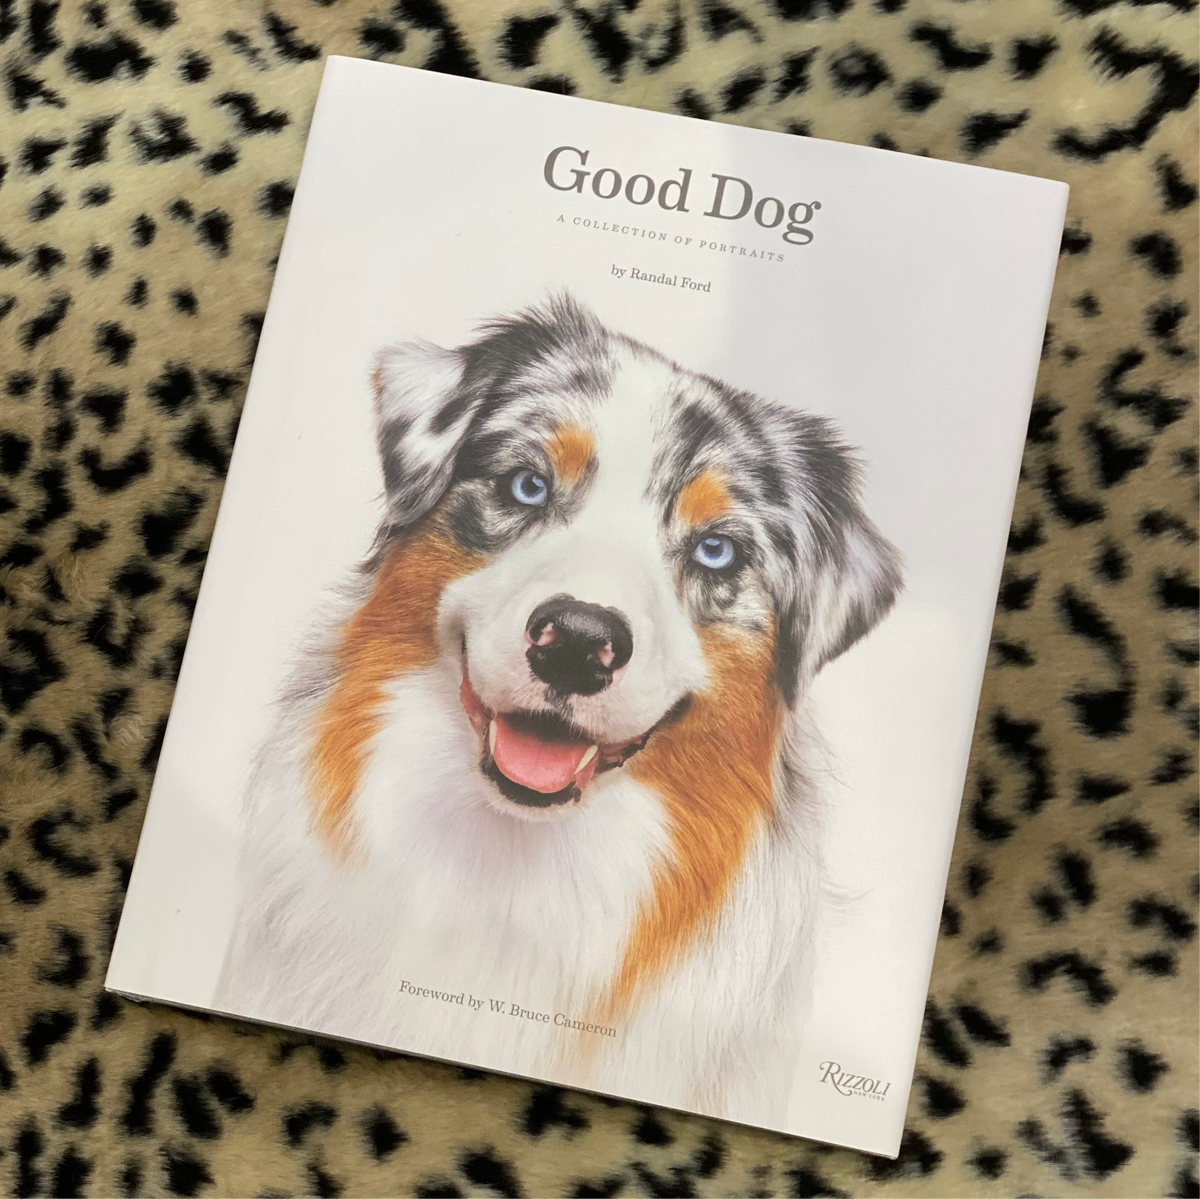 Good Dog by Randal Ford